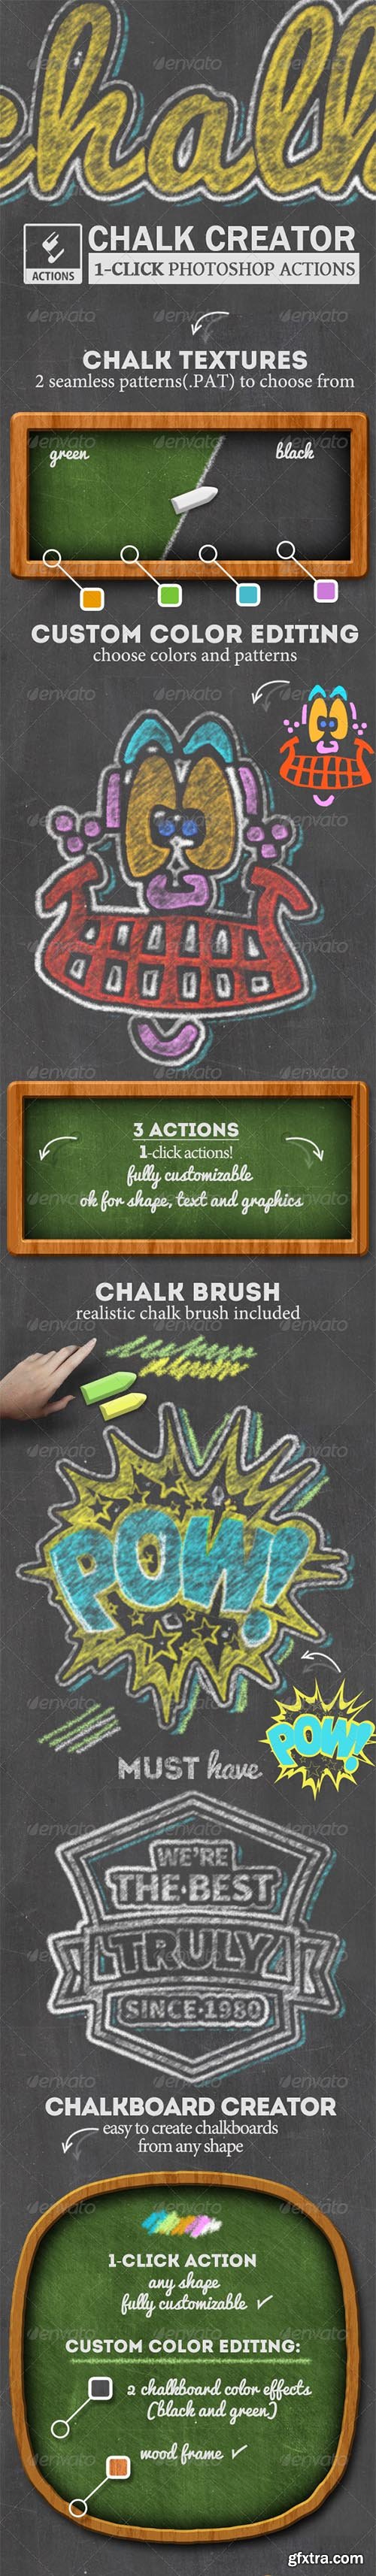 Graphicriver Chalk and Chalkboard Photoshop Creator 8174689